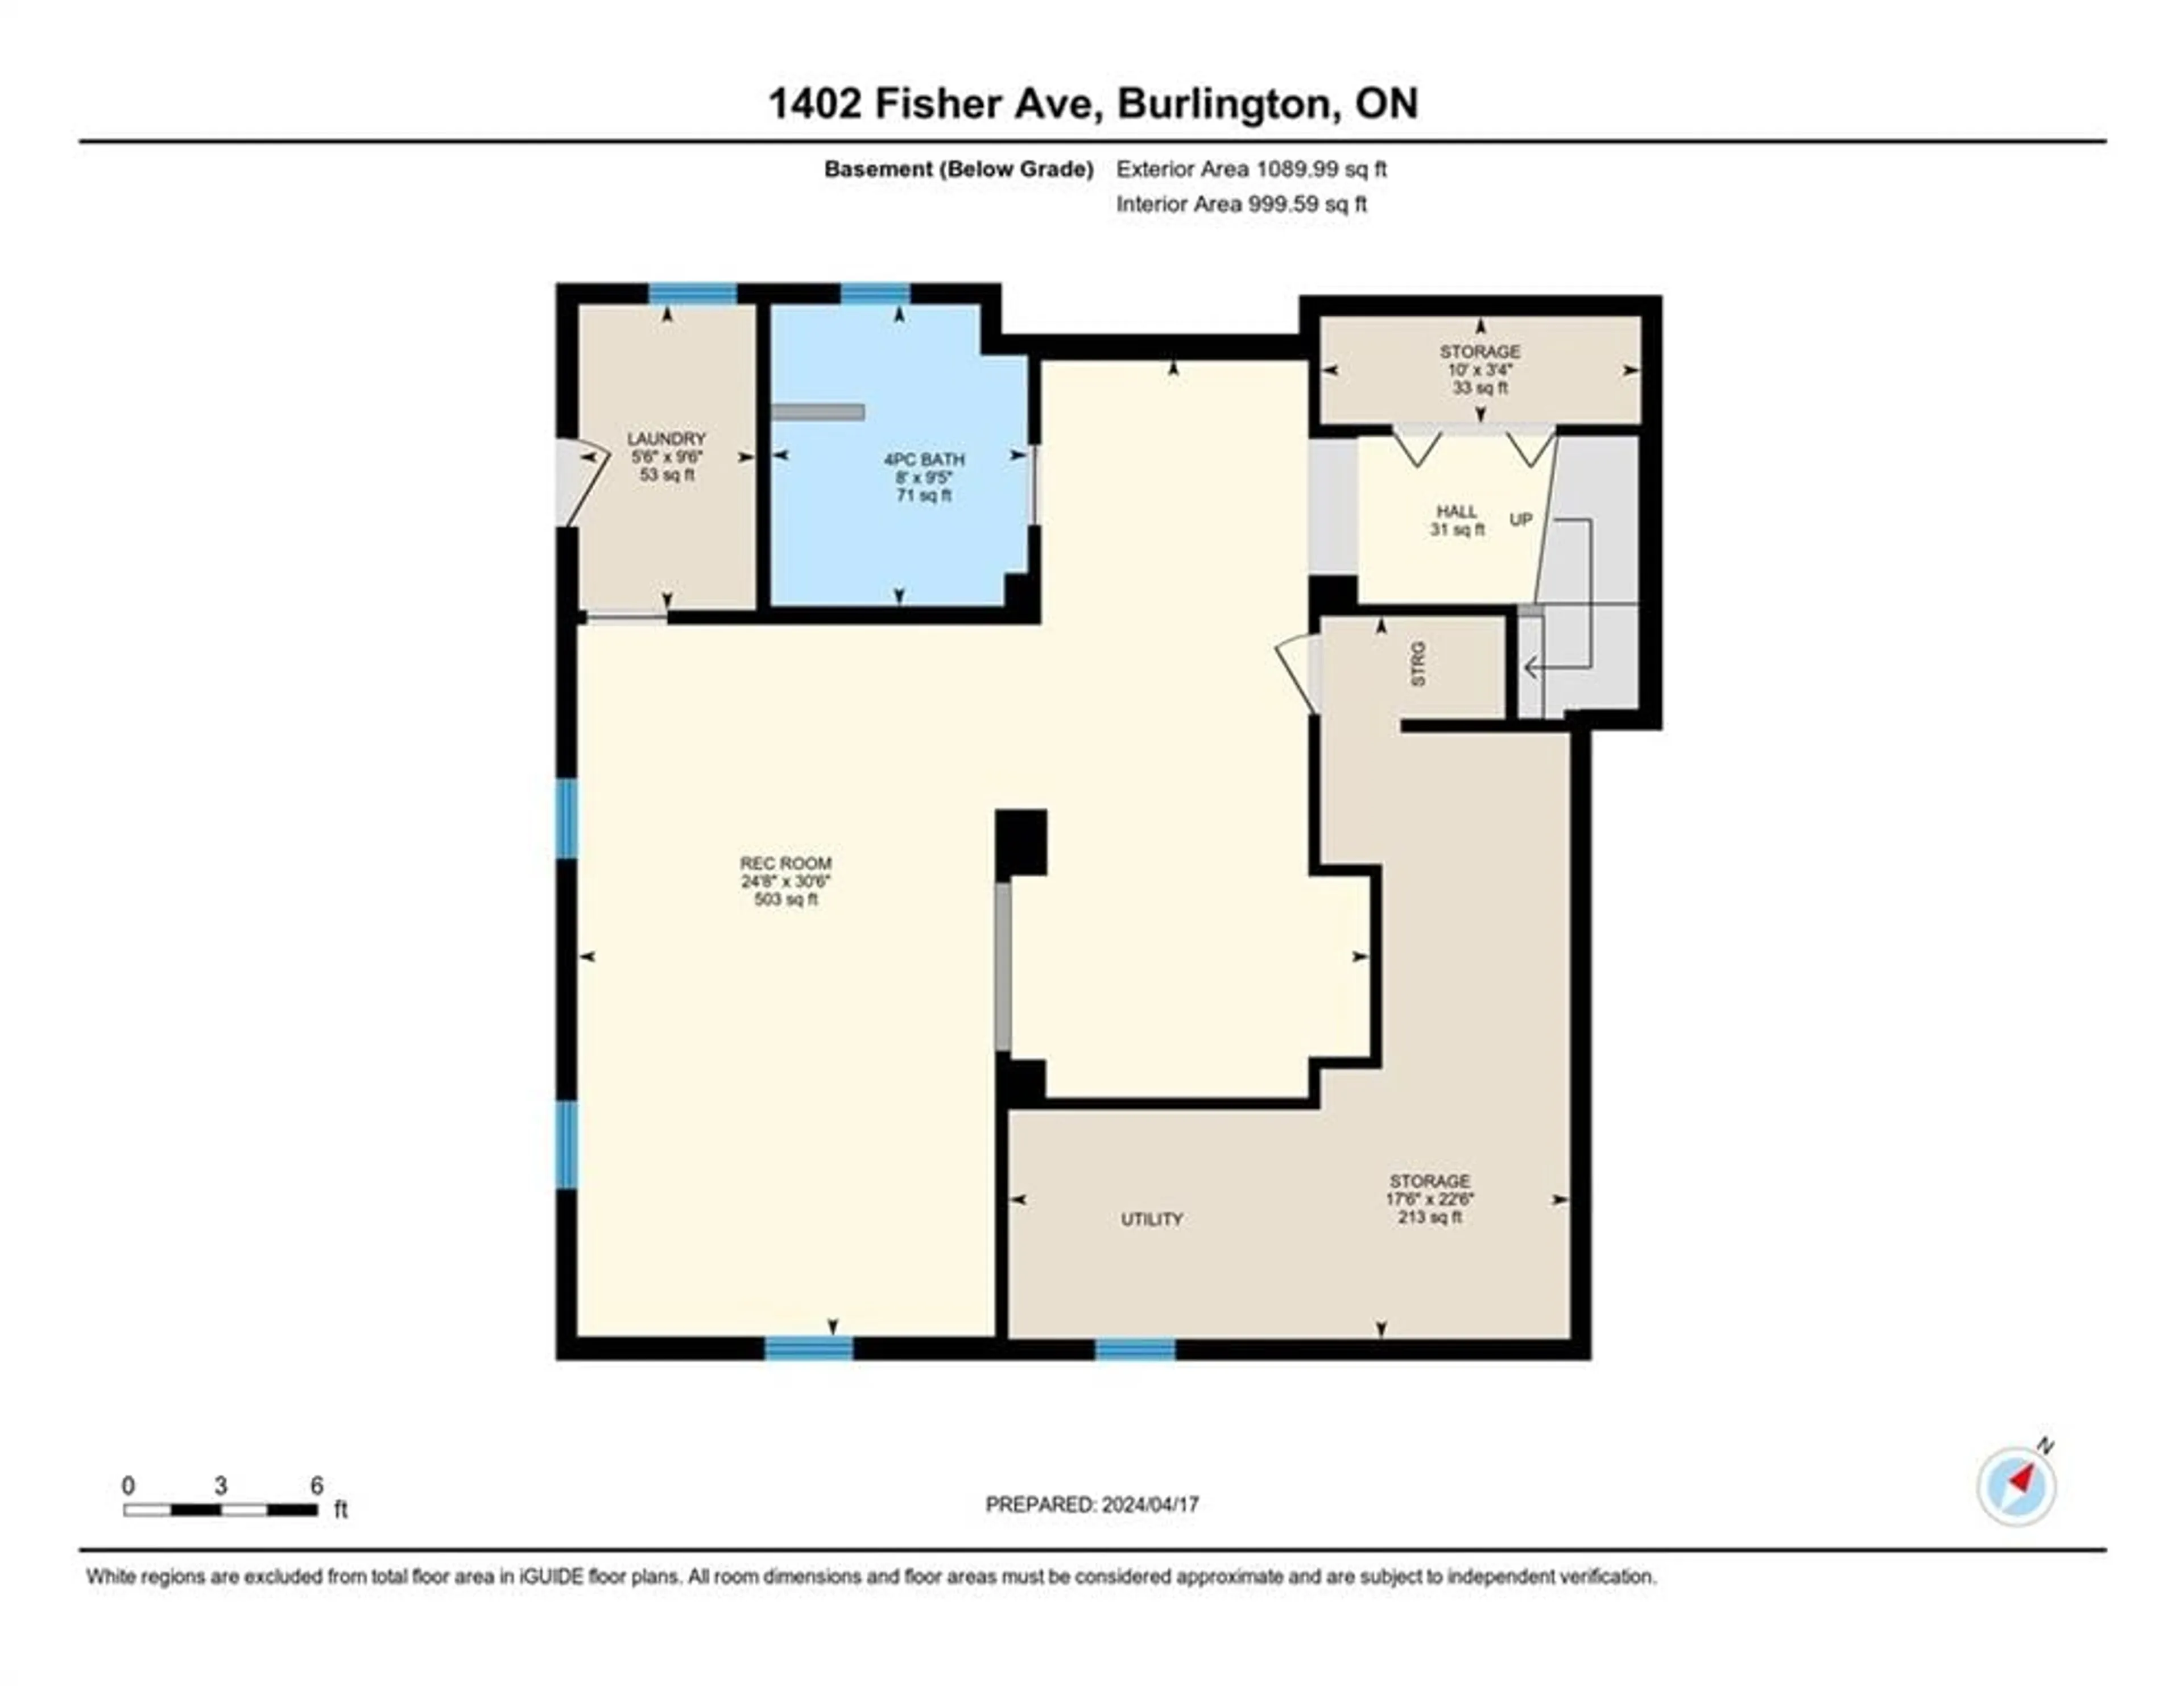 Floor plan for 1402 FISHER Ave, Burlington Ontario L7P 2L6